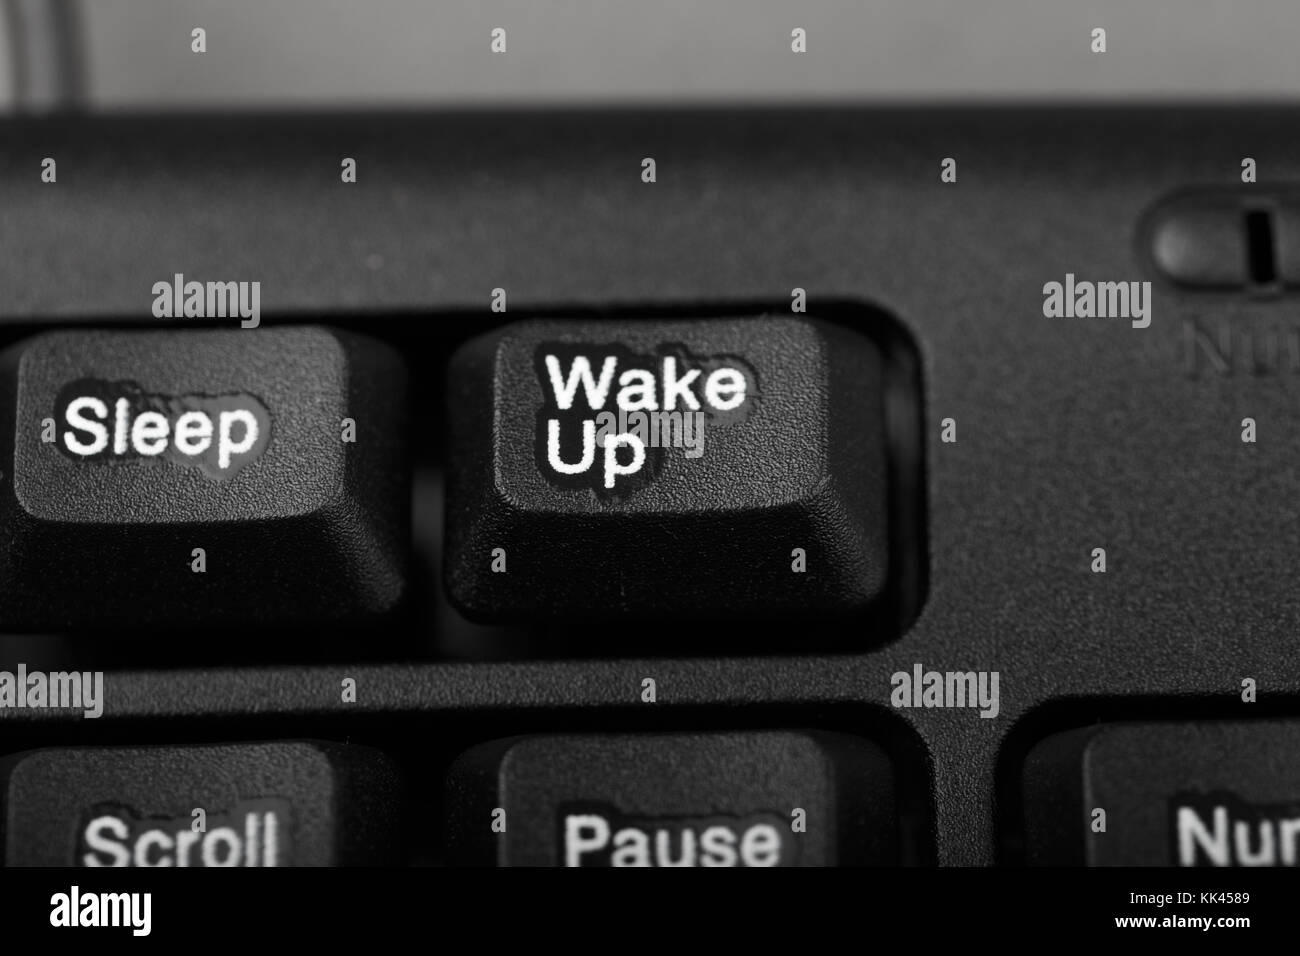 Sleep Button On Hp Keyboard